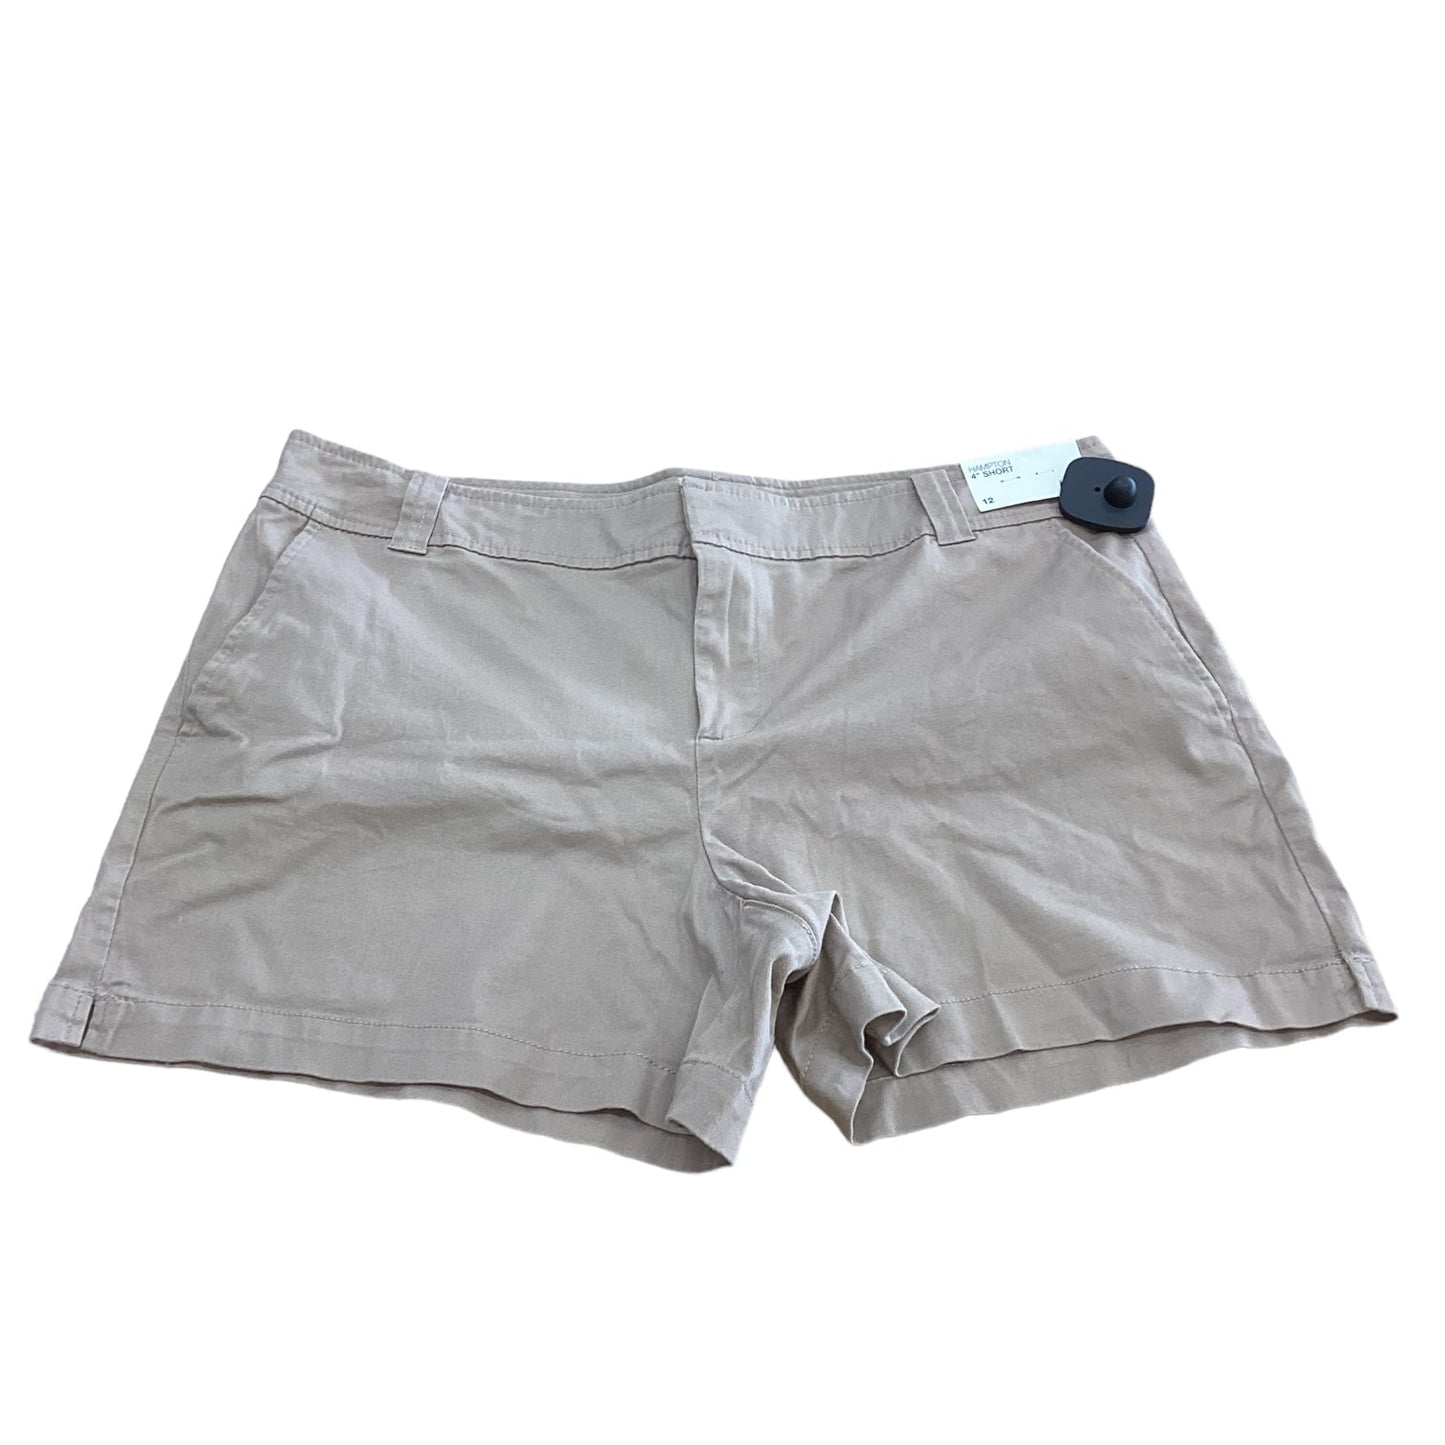 Tan Shorts Clothes Mentor, Size 12